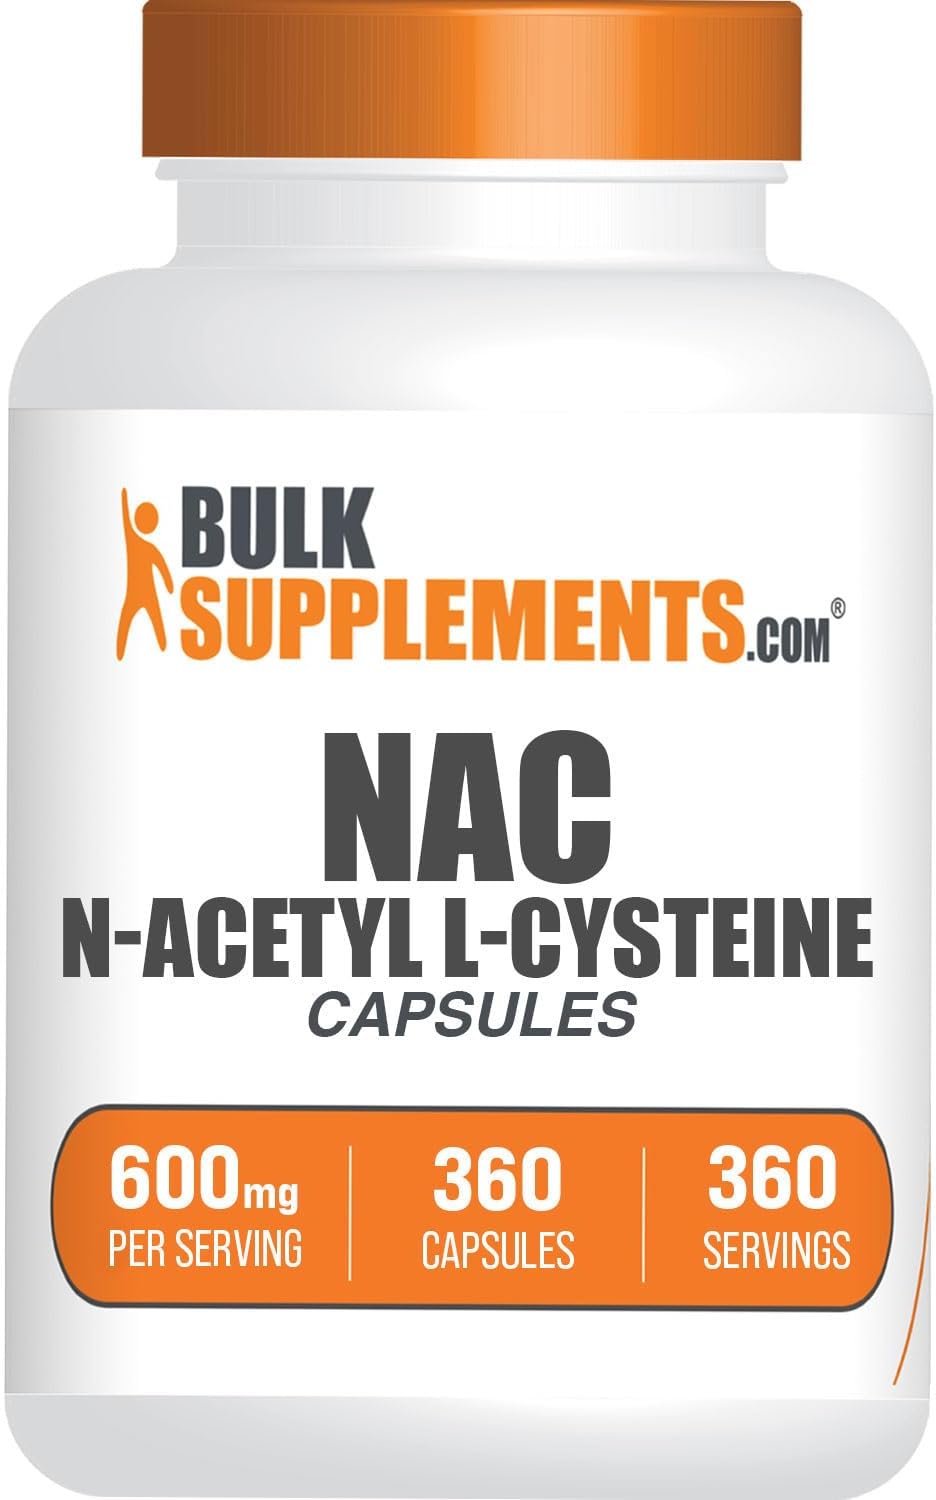 BULKSUPPLEMENTS.COM N-Acetyl L-Cysteine Capsules - N-Acetyl Cysteine 600mg, NAC Supplement - 600mg per Capsule, Gluten Free - 1 NAC Capsule per Serving, 360 Capsules (Pack of 1)